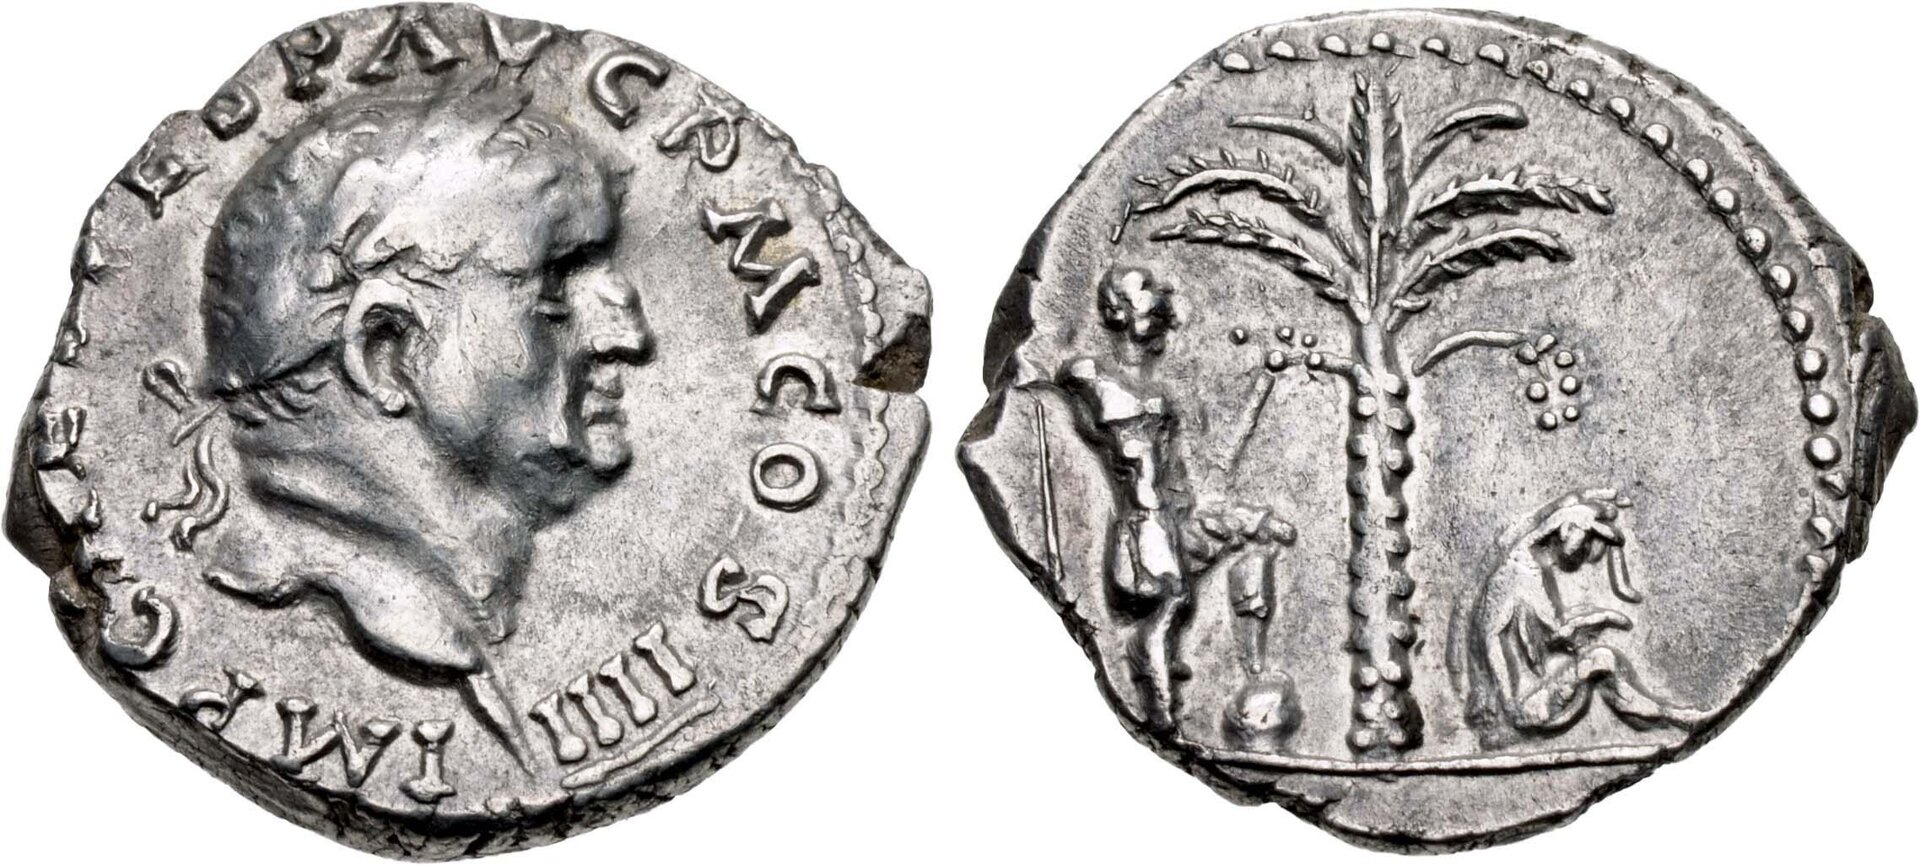 vespasian-ad-69-79-ar-denarius-7738101.jpg